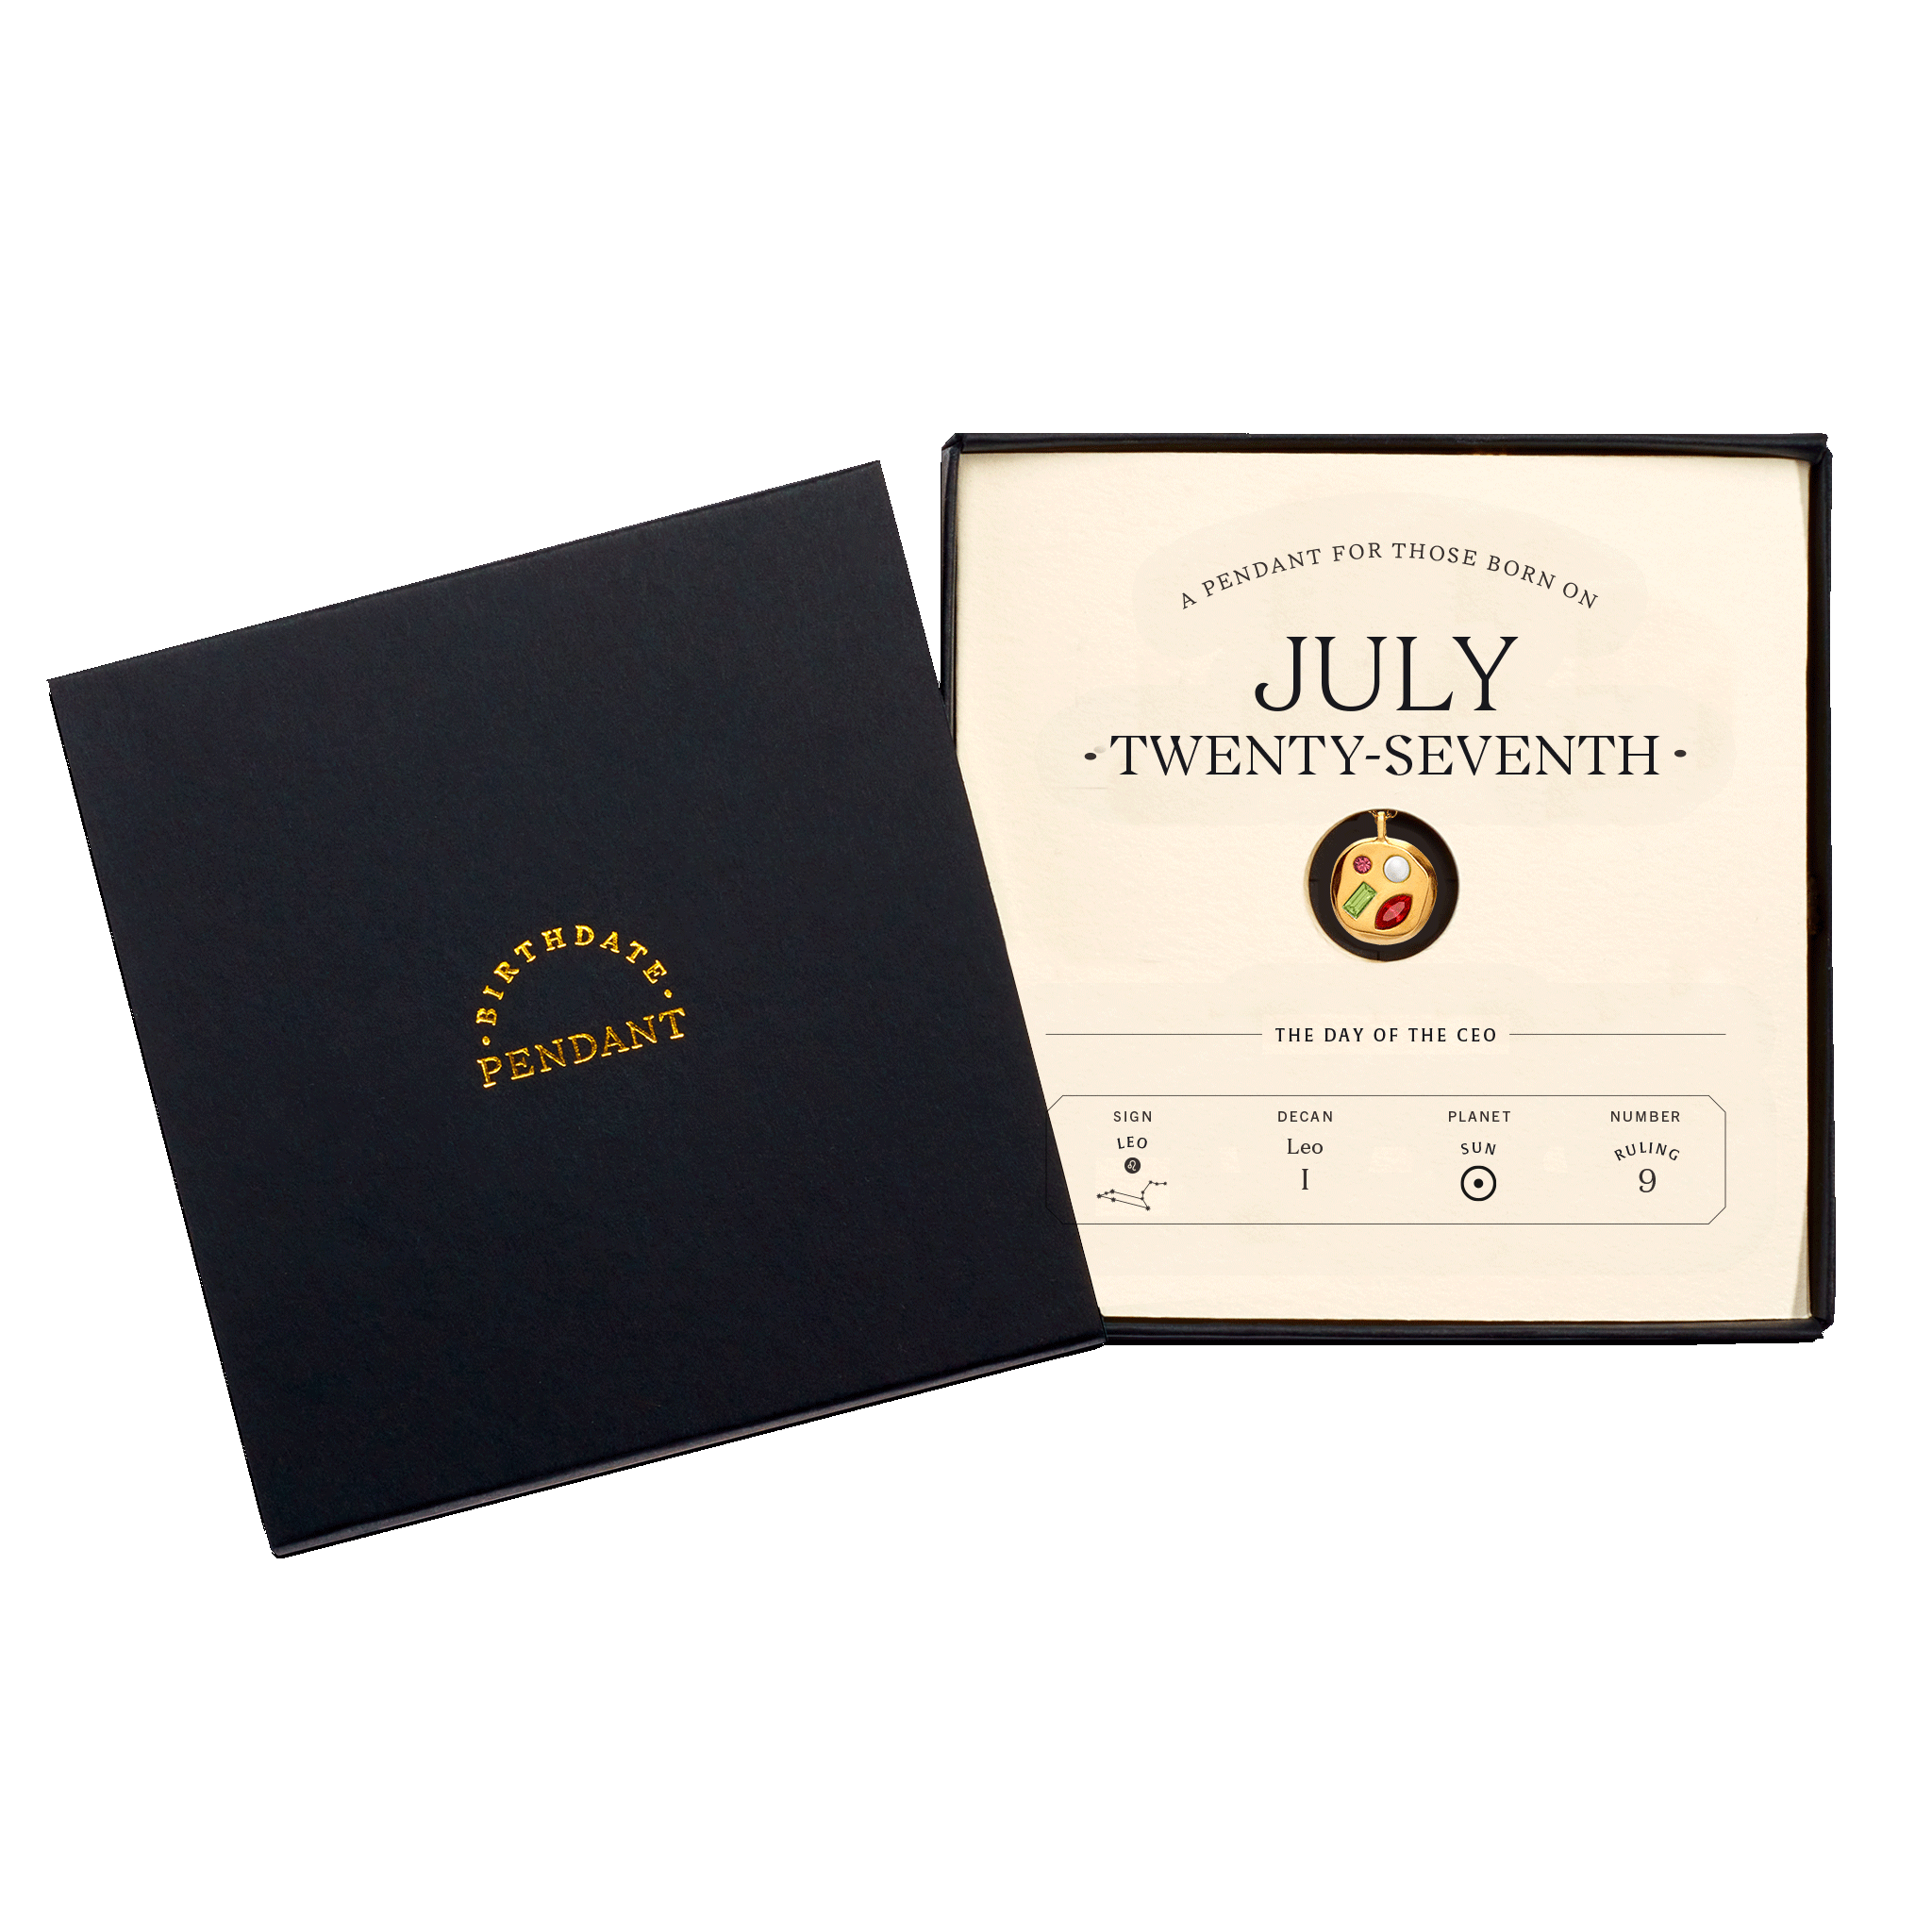 The July Twenty-Seventh Pendant inside its box